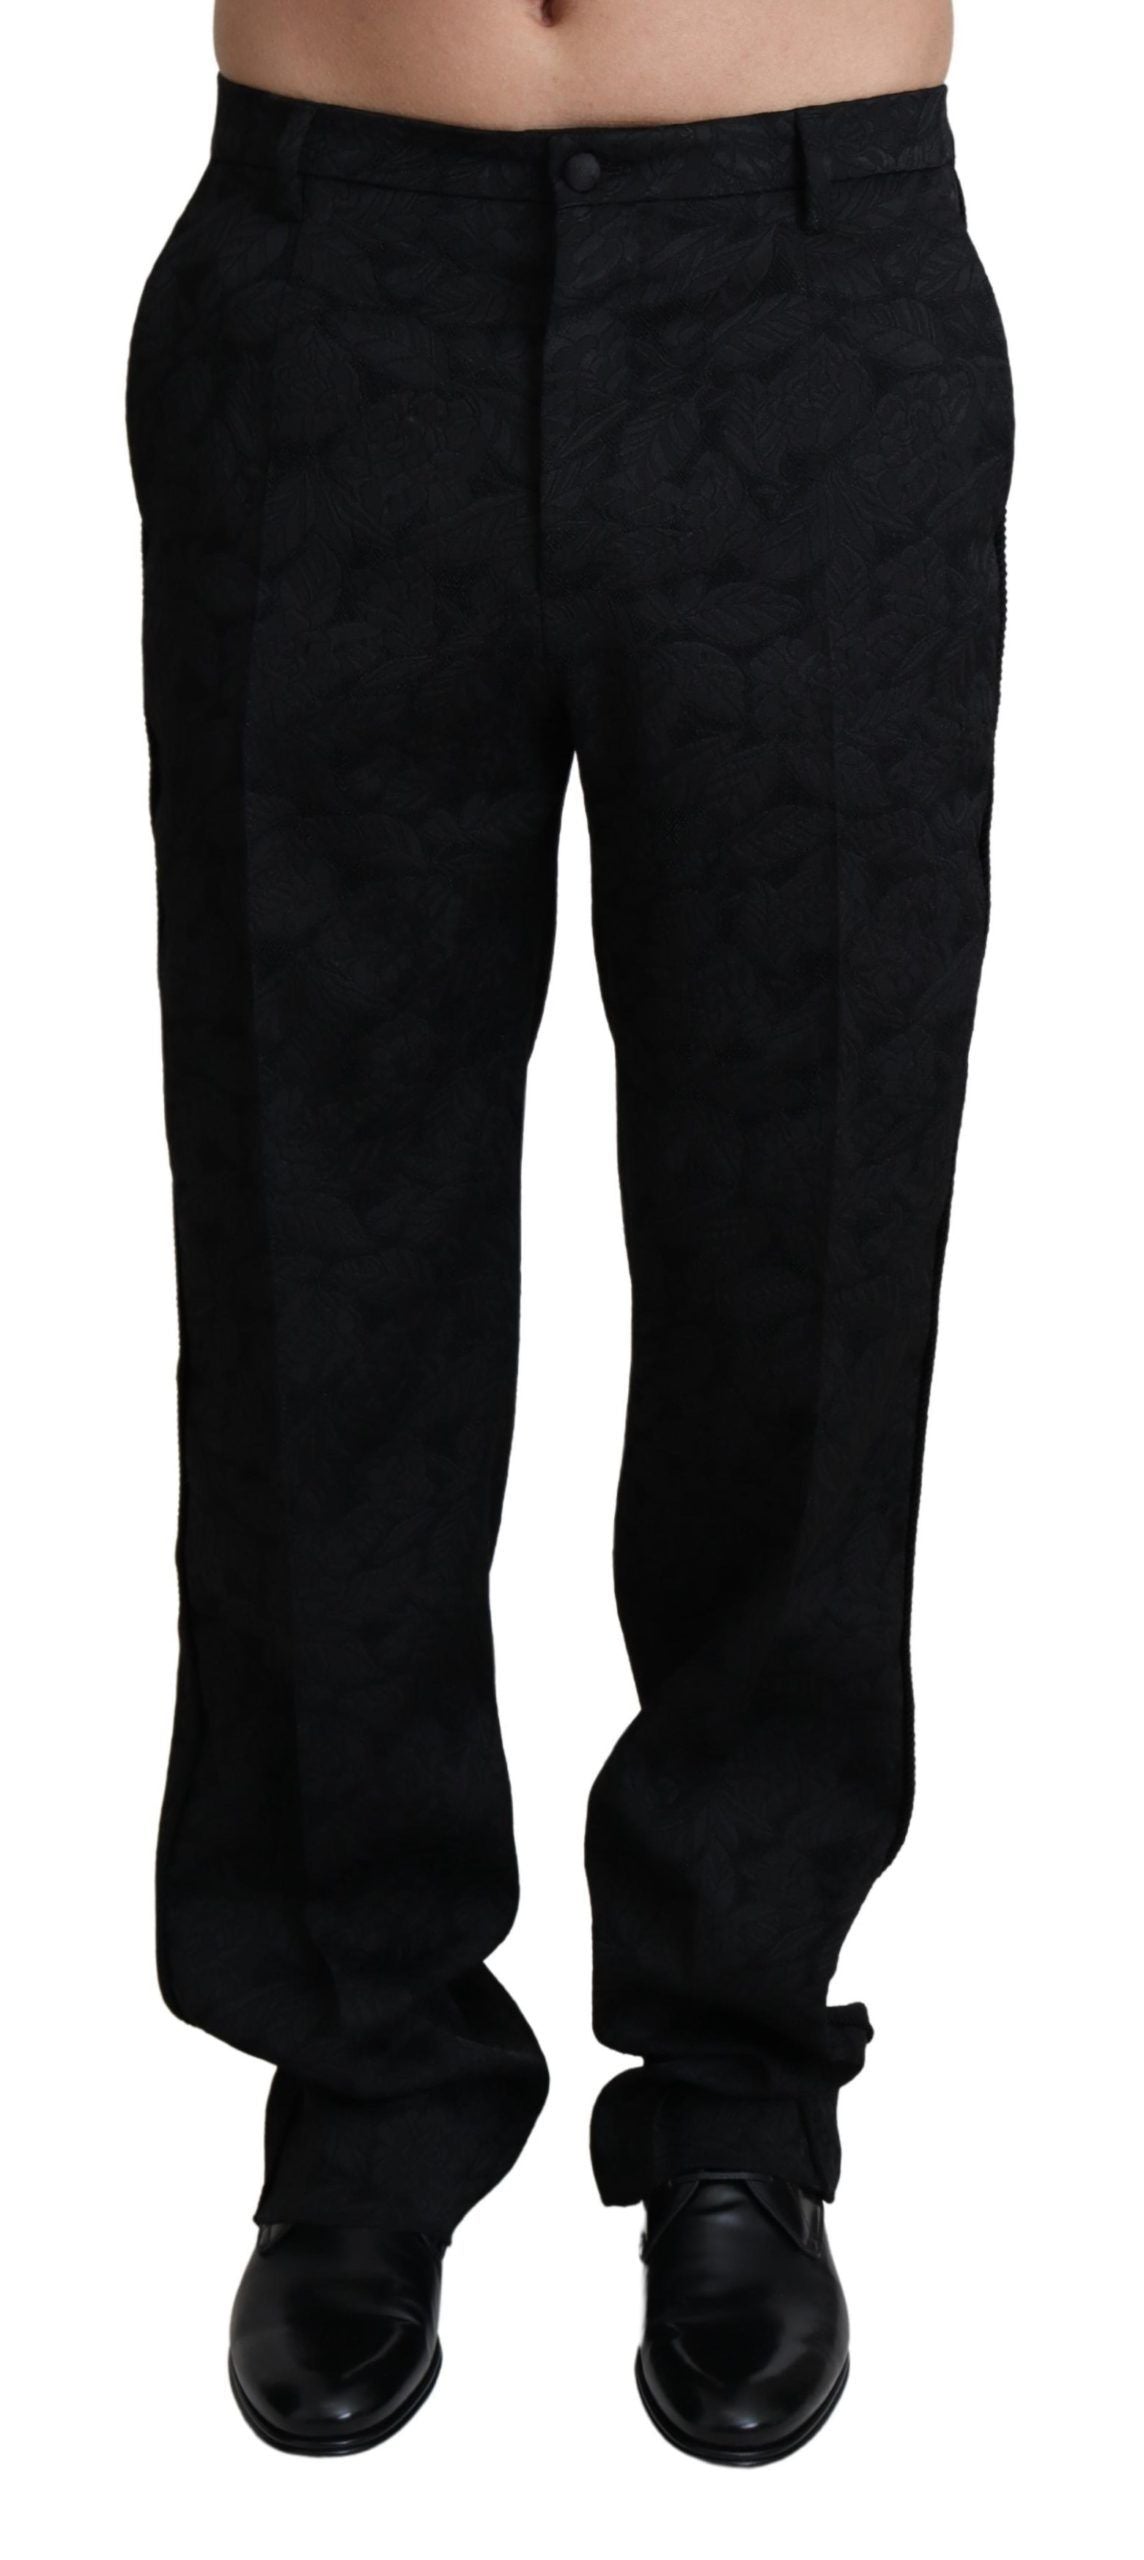 Elegant Black Dress Pants for Sophisticated Style